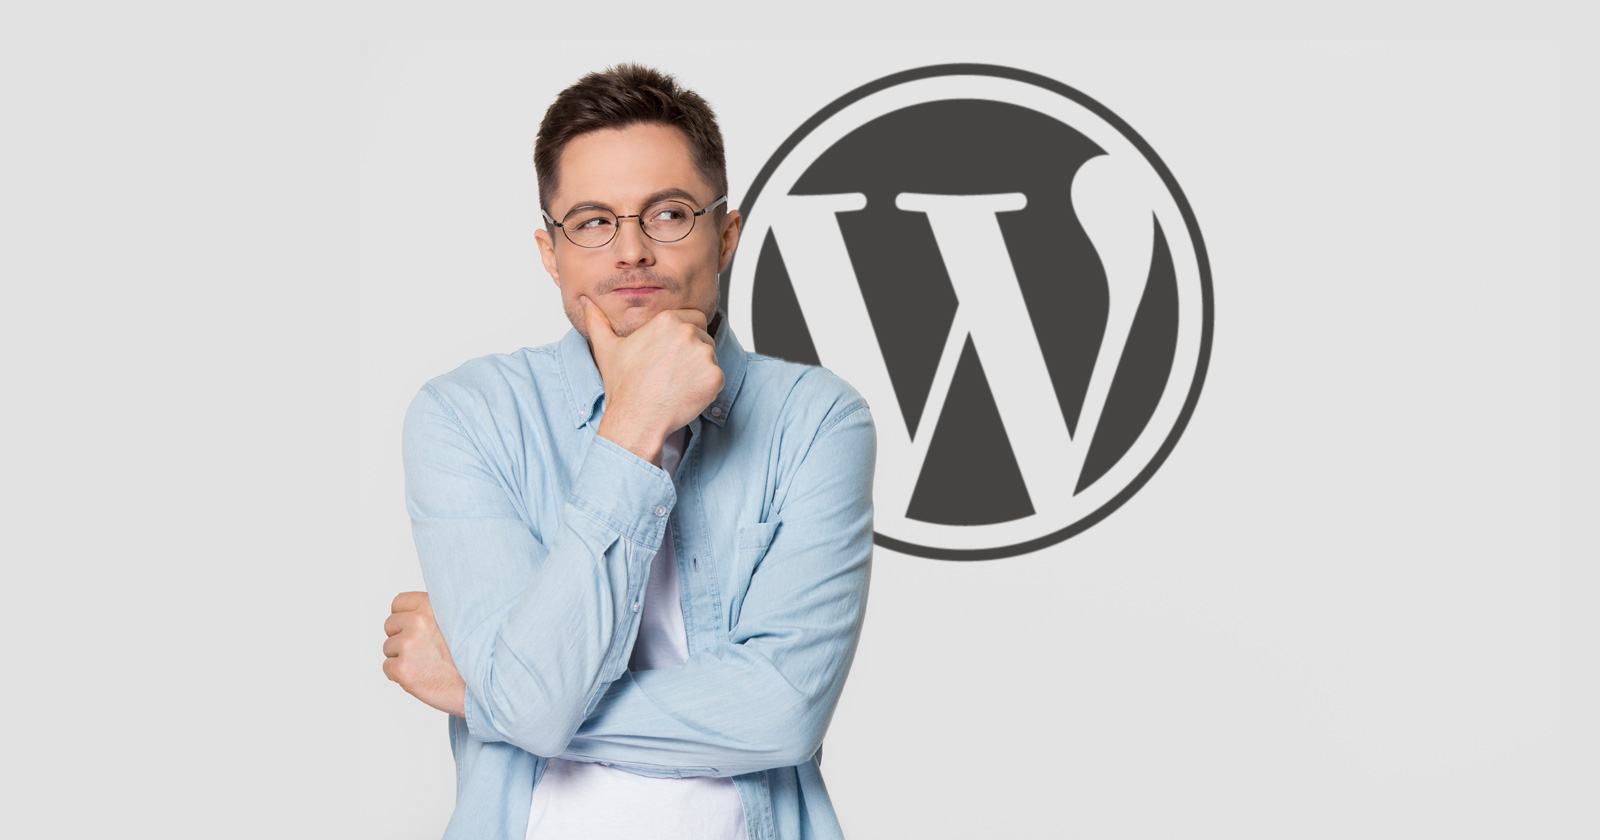 WordPress Admin Interface Is “Simply Bad”